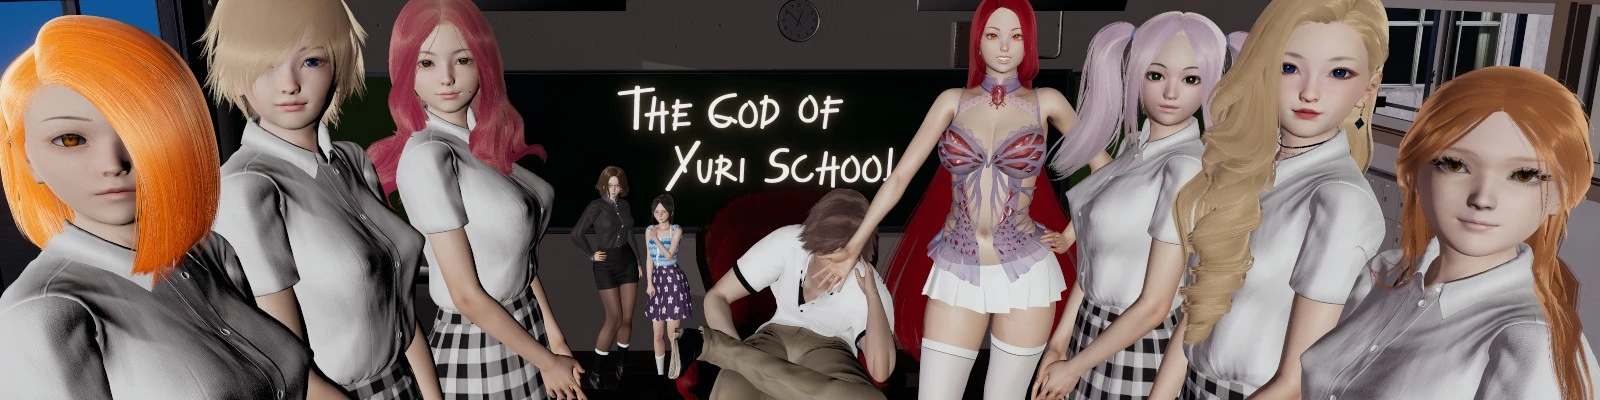 The God of Yuri School main image